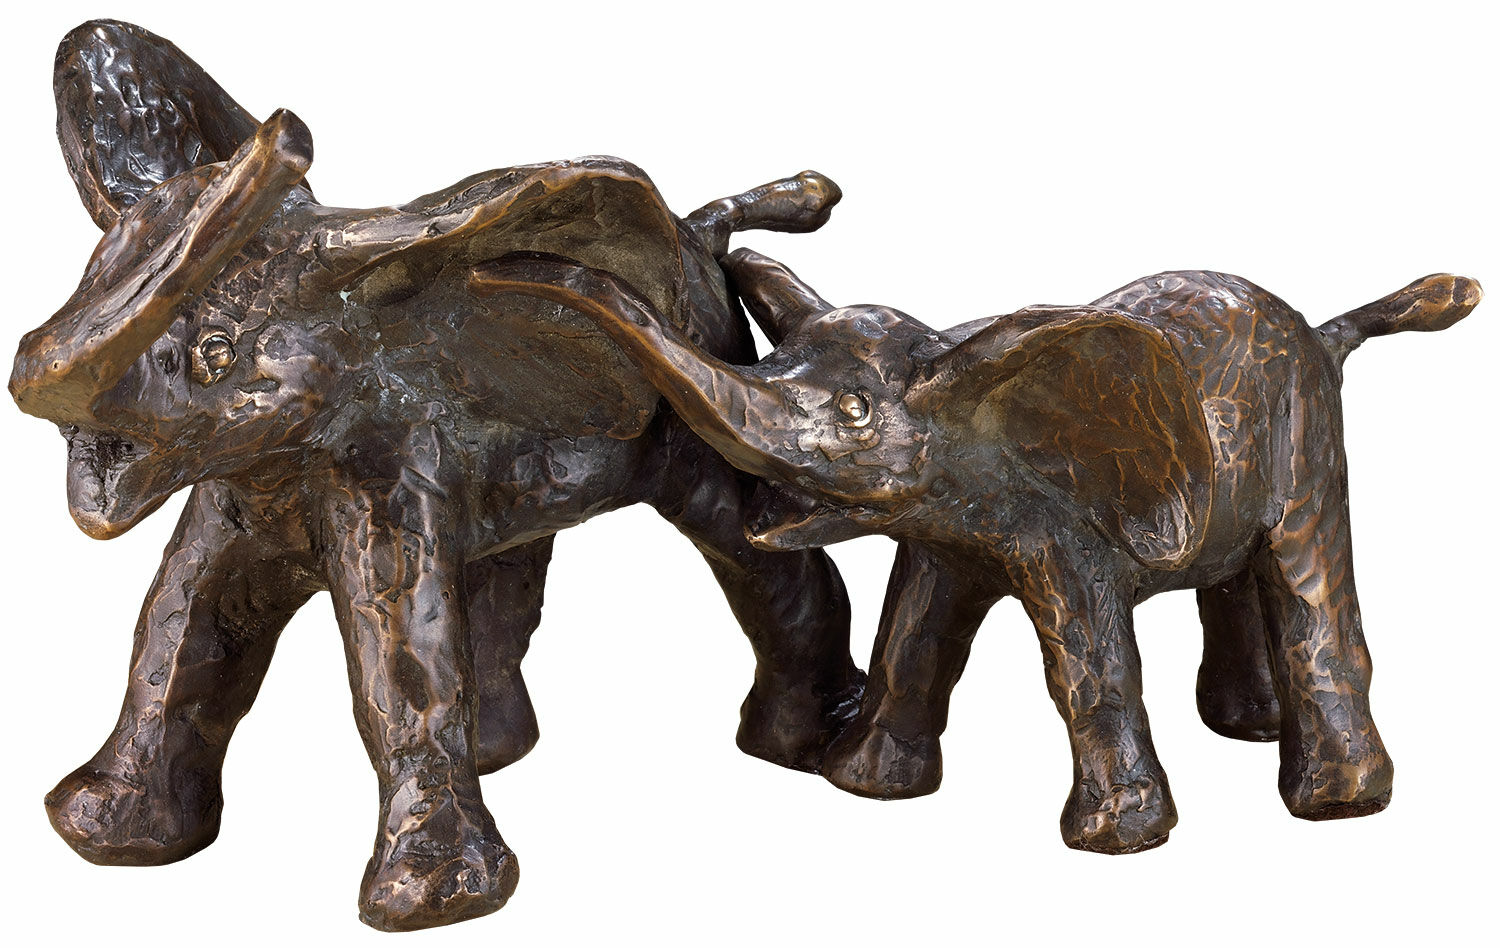 Sculpture "Elephant Family", bronze by Kurt Arentz